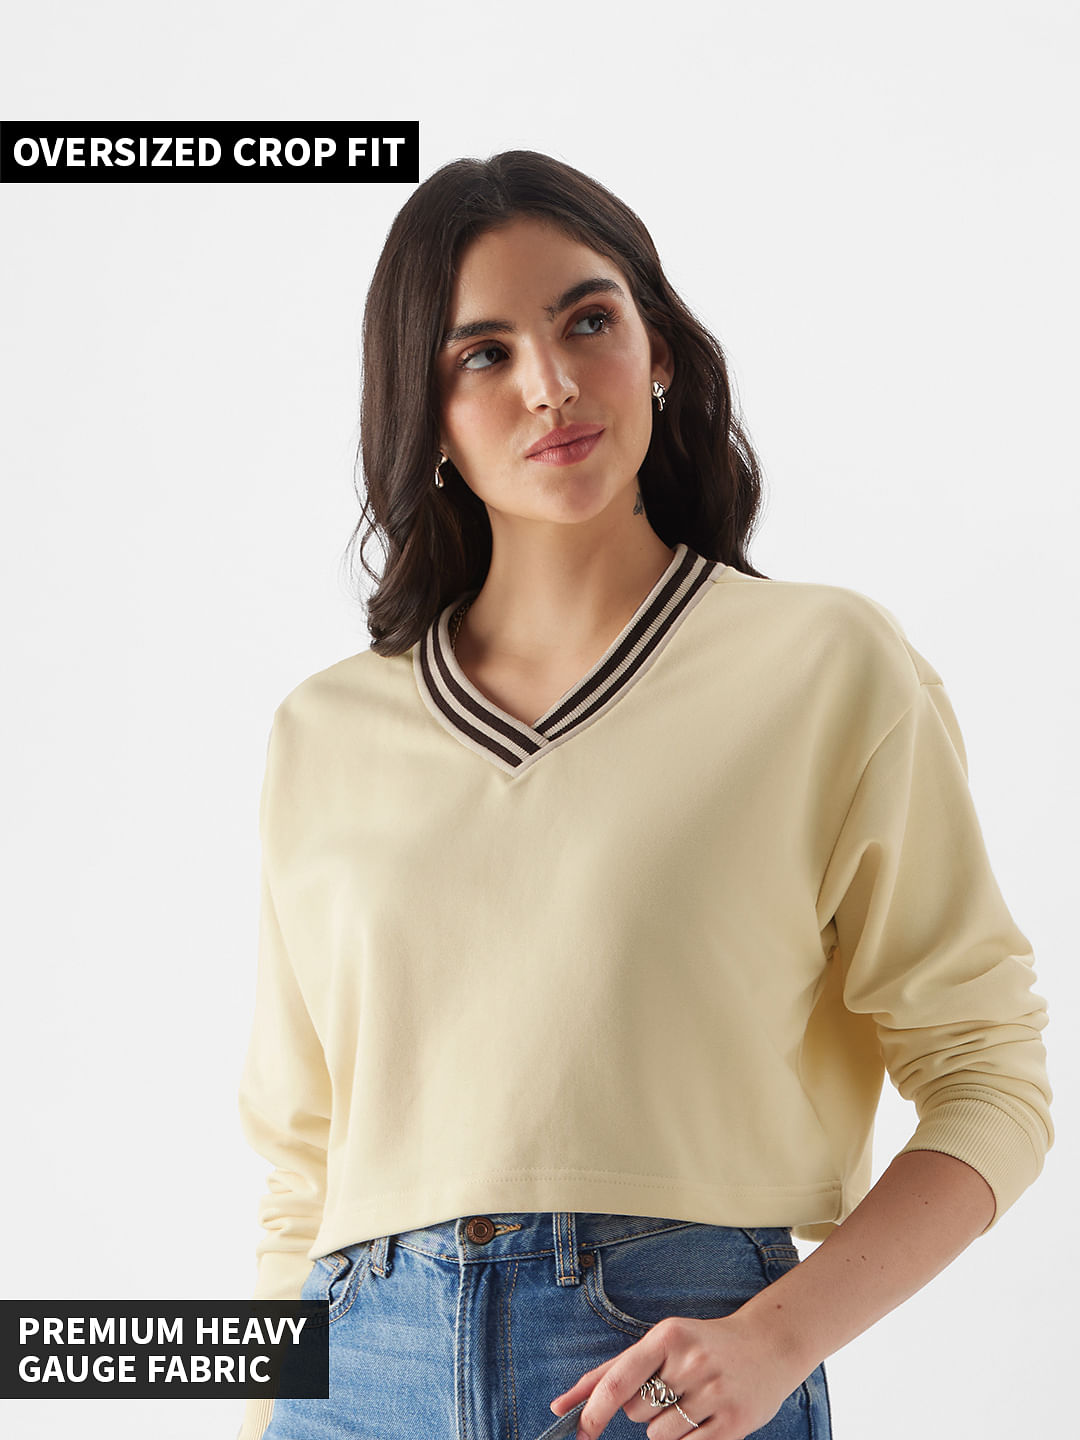 Buy The Souled Store Periwinkle Sweatshirt Women Oversized